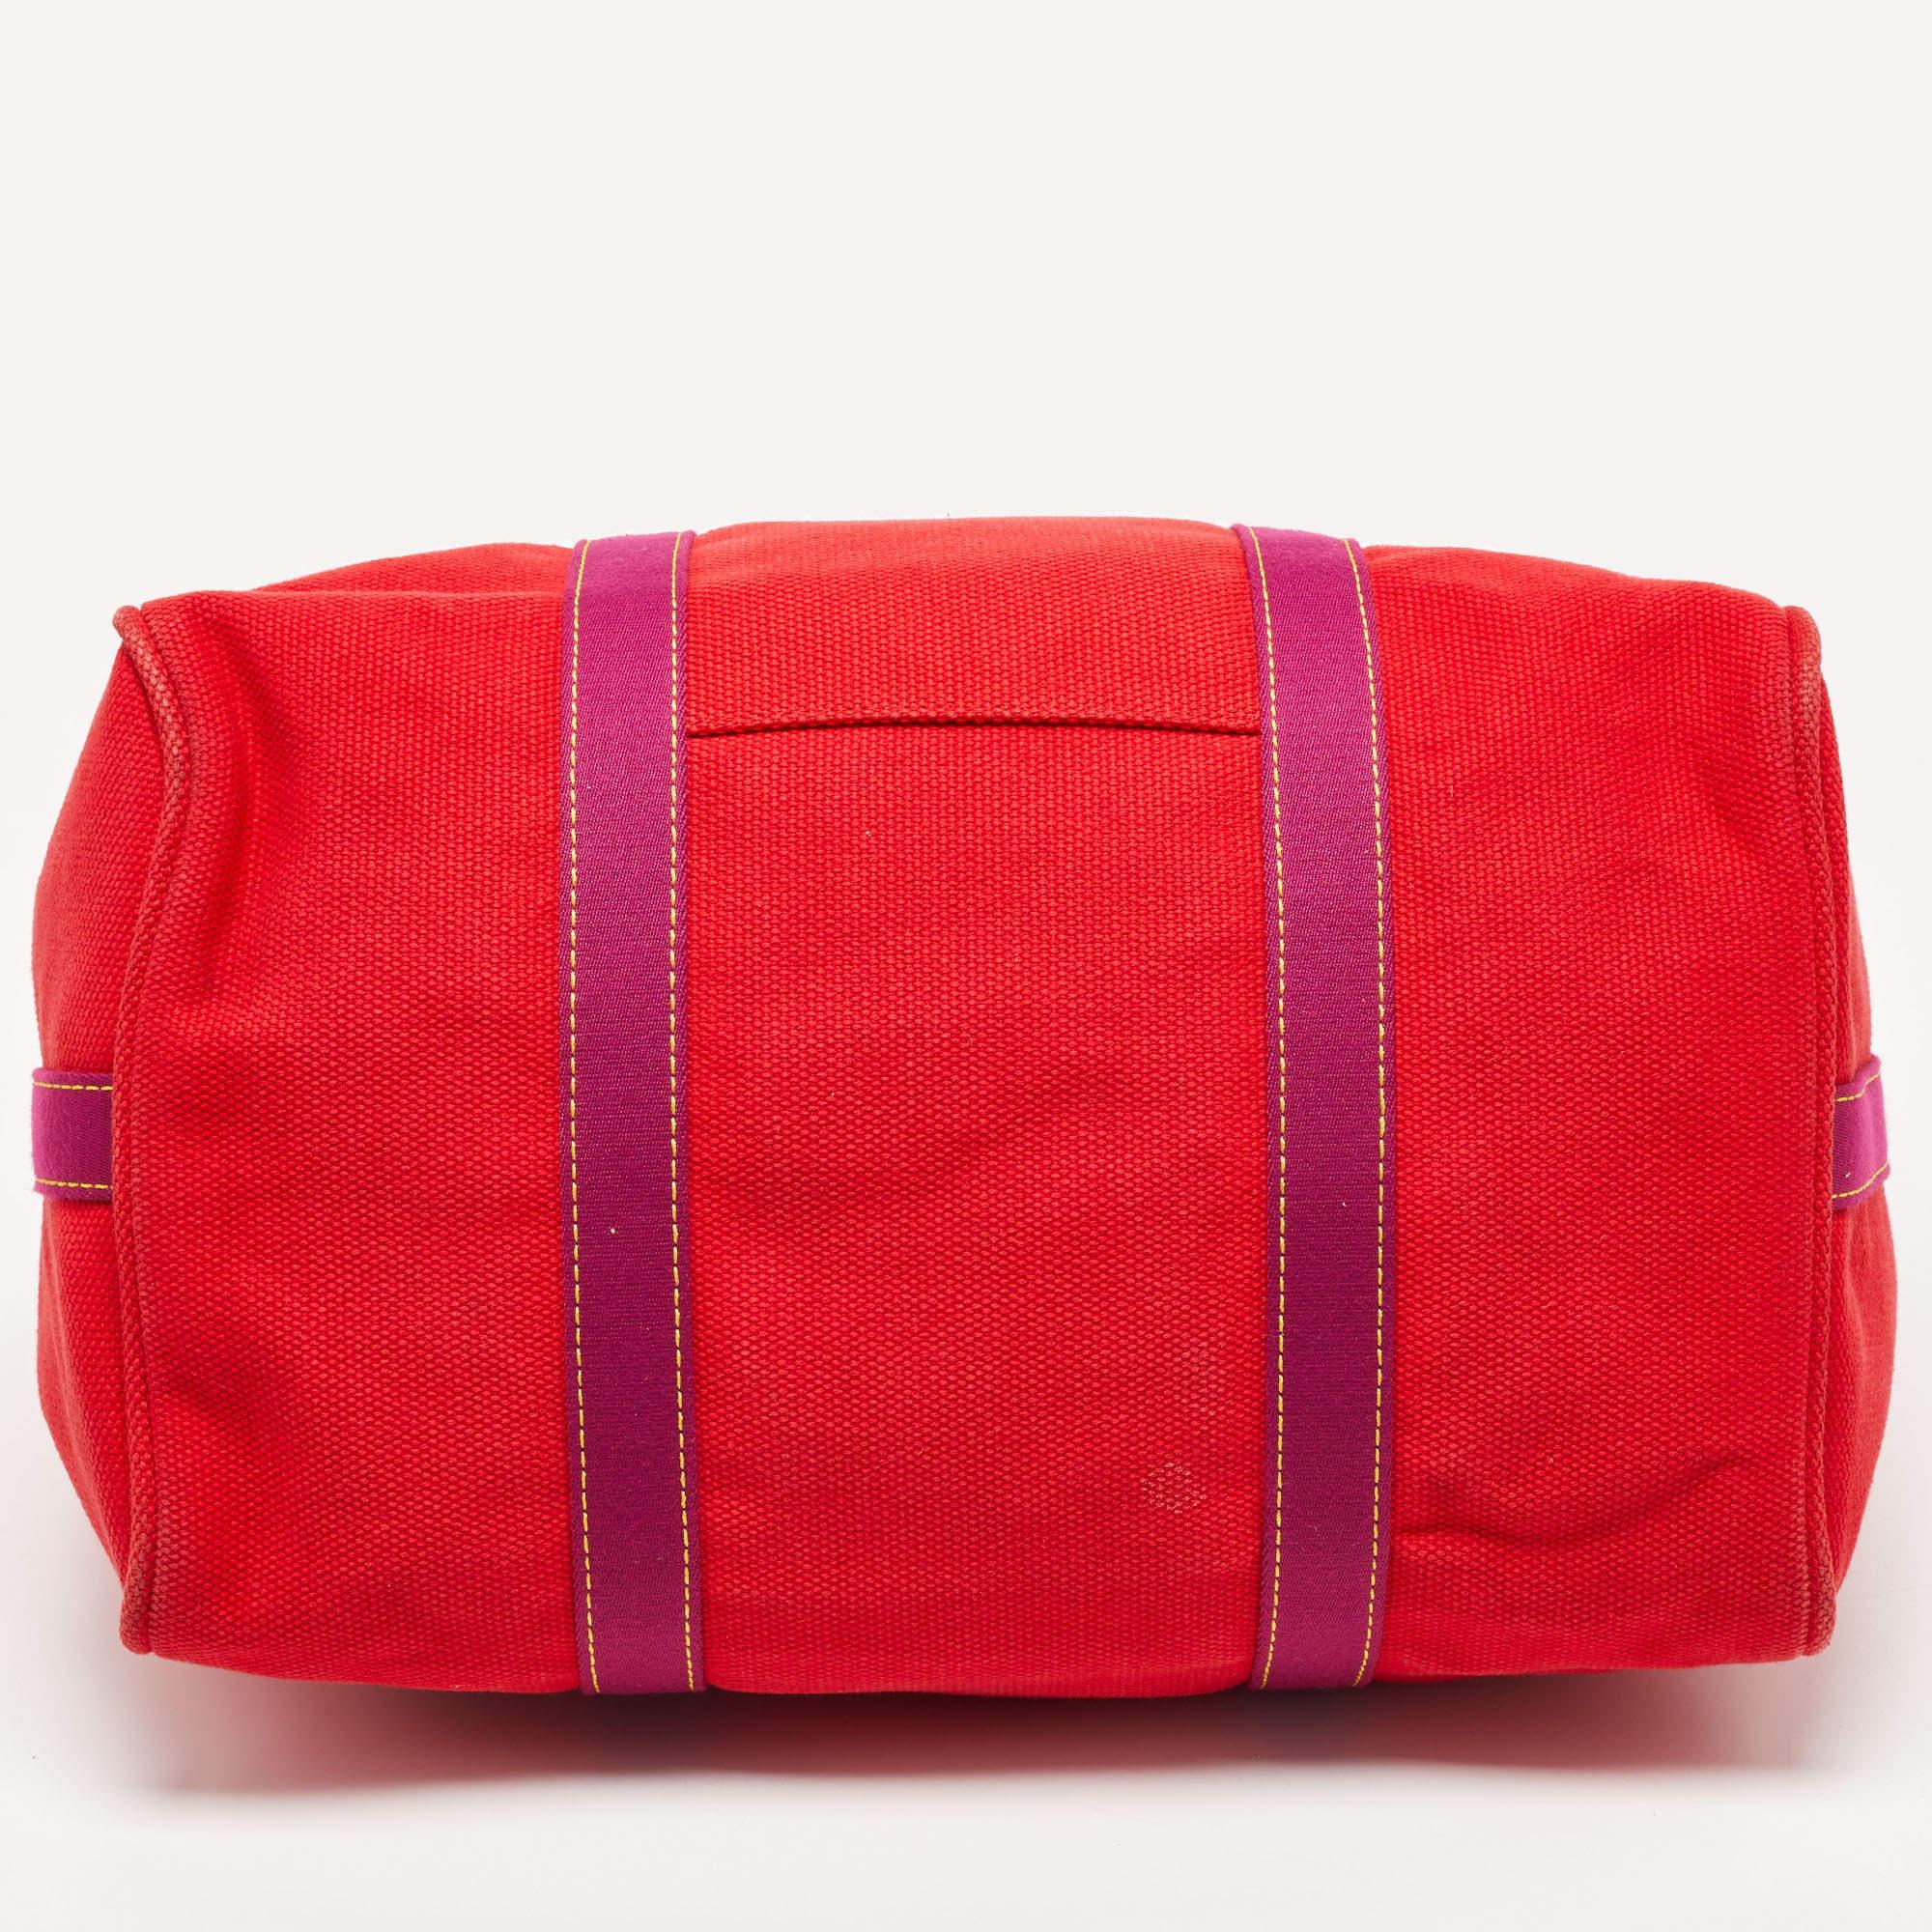 Louis Vuitton Rouge Toile Canvas Antigua Sac Weekend Bag For Sale 9